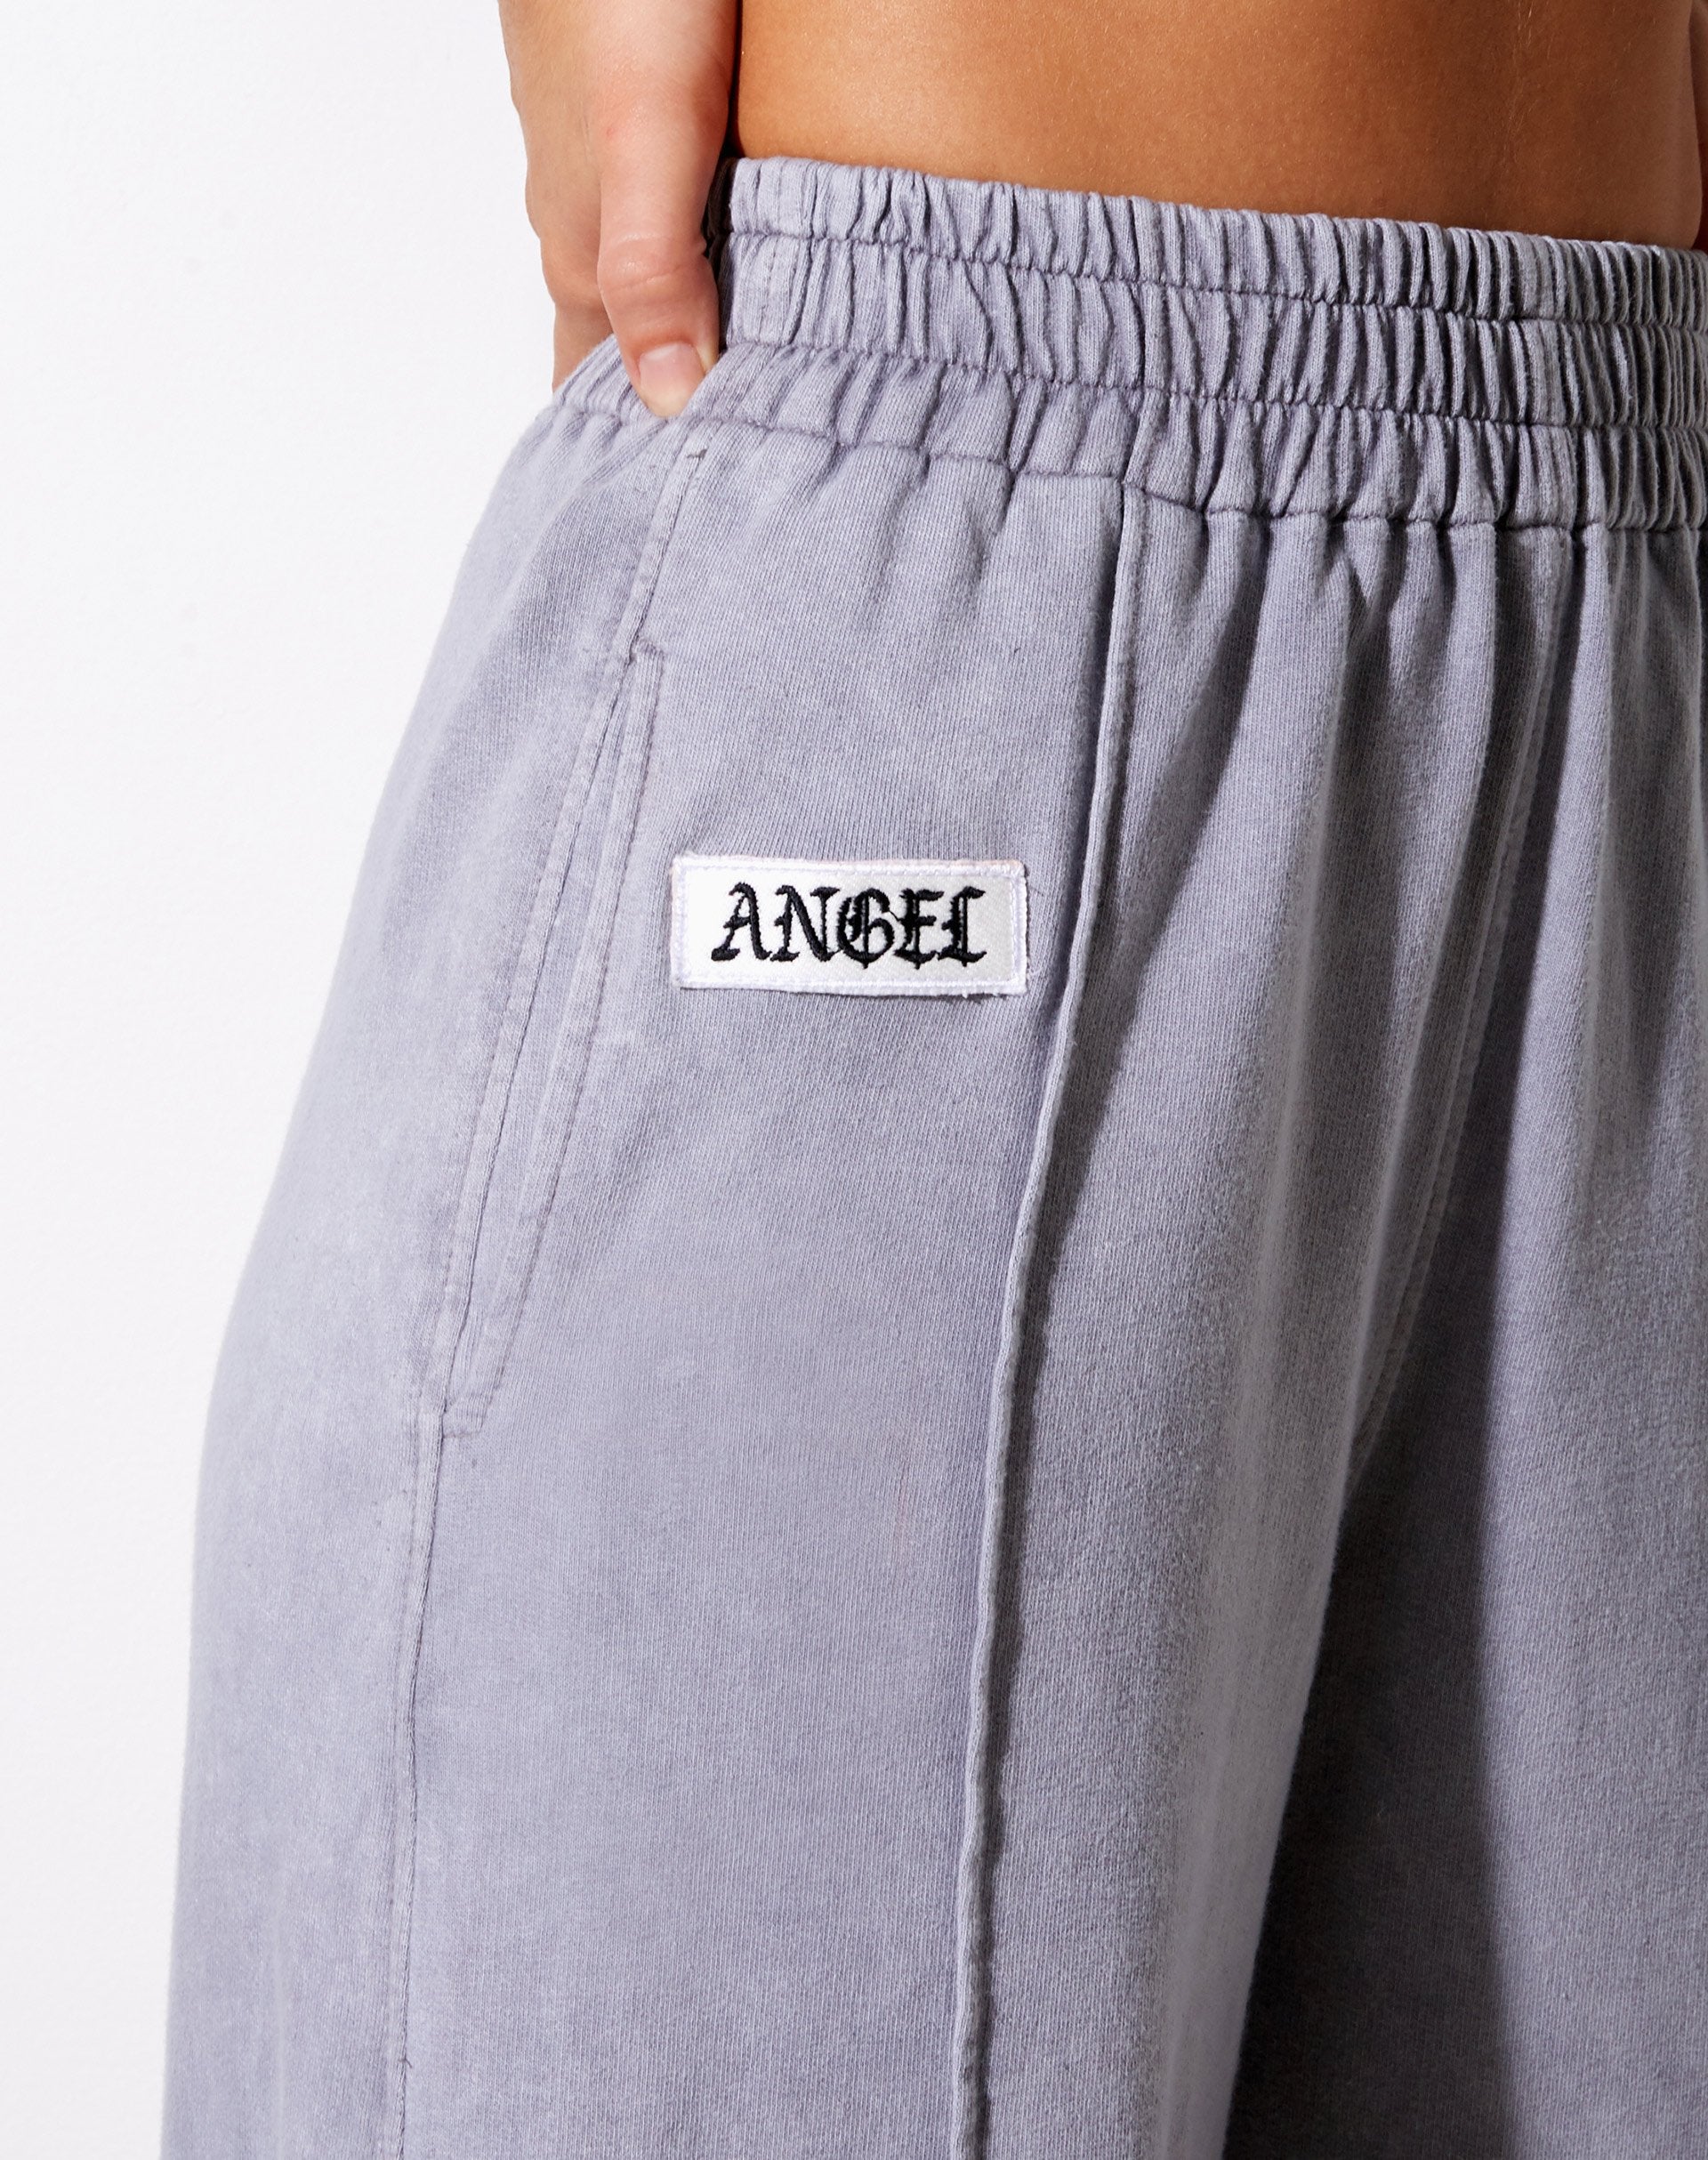 Image of Wungu Trouser in Grey Wash Angel Embro Label